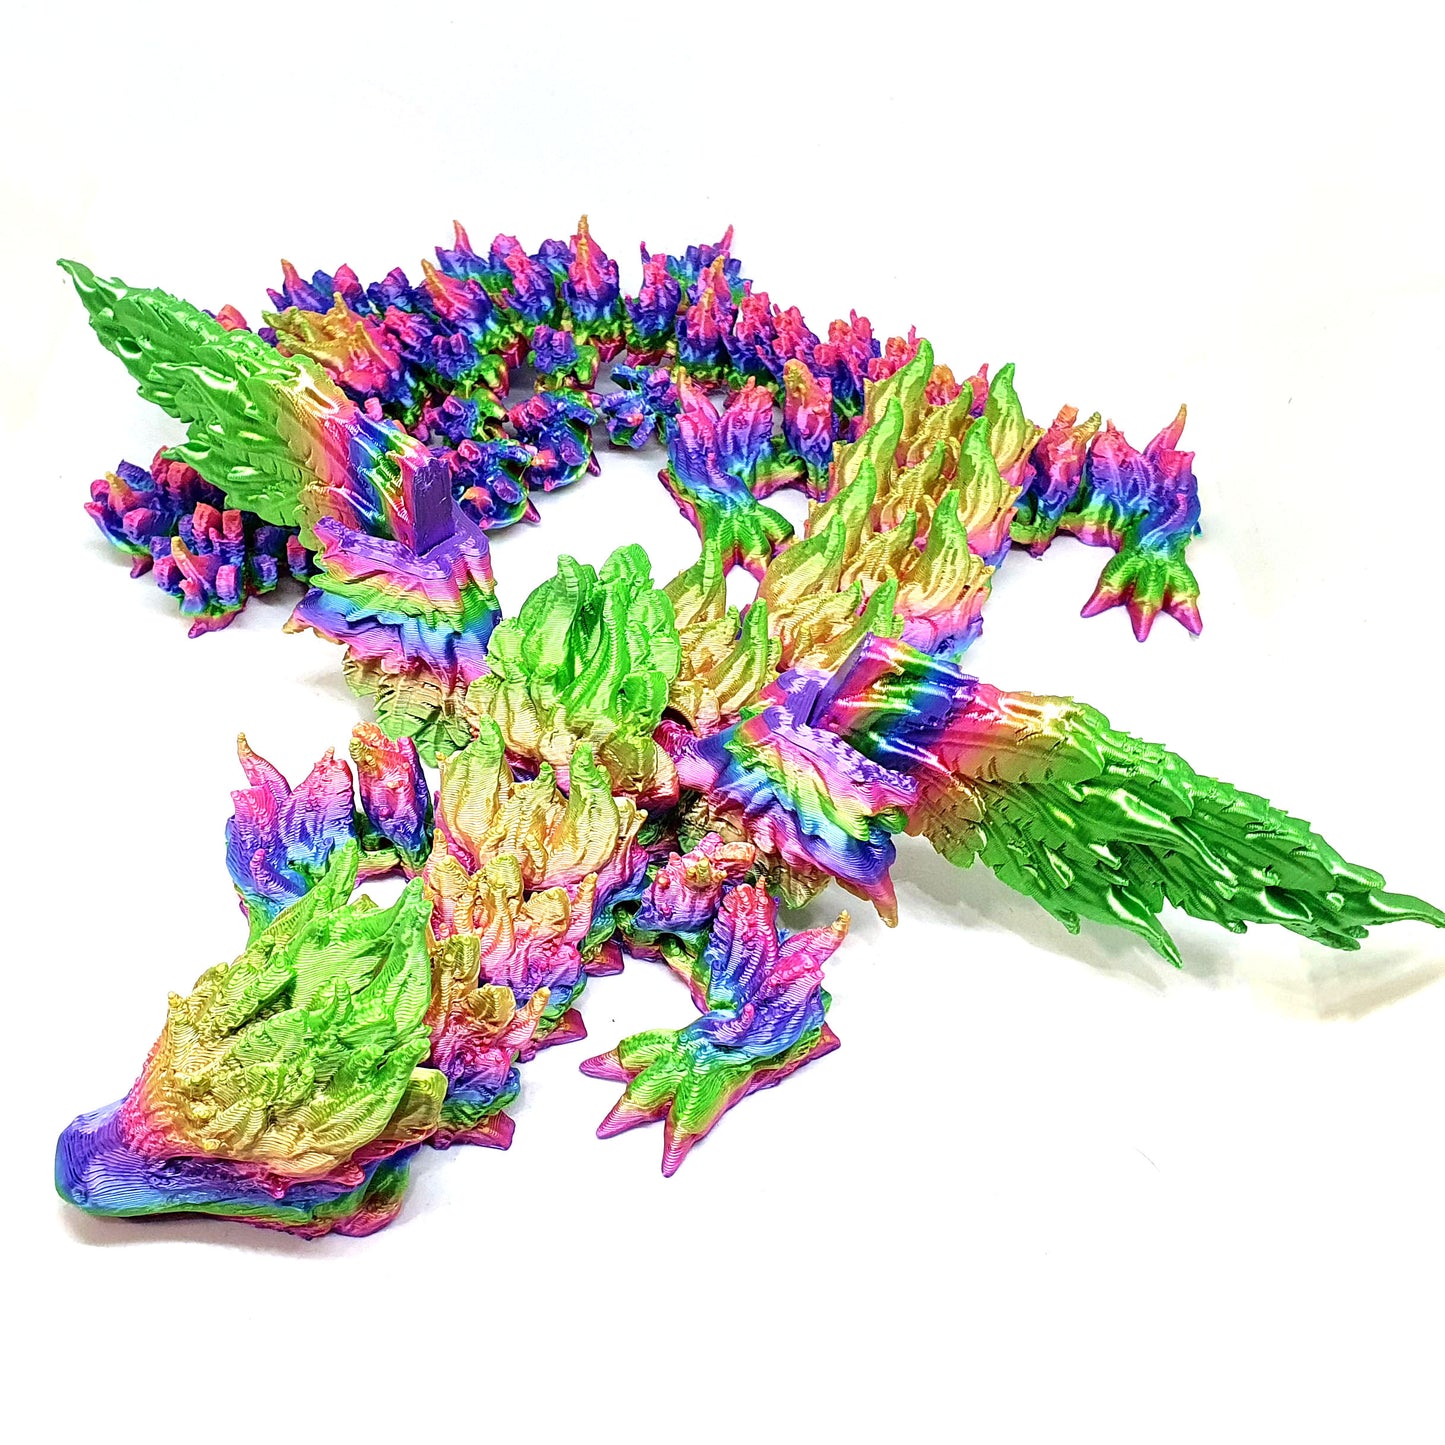 Pheonix Rainbow Adult Dragon